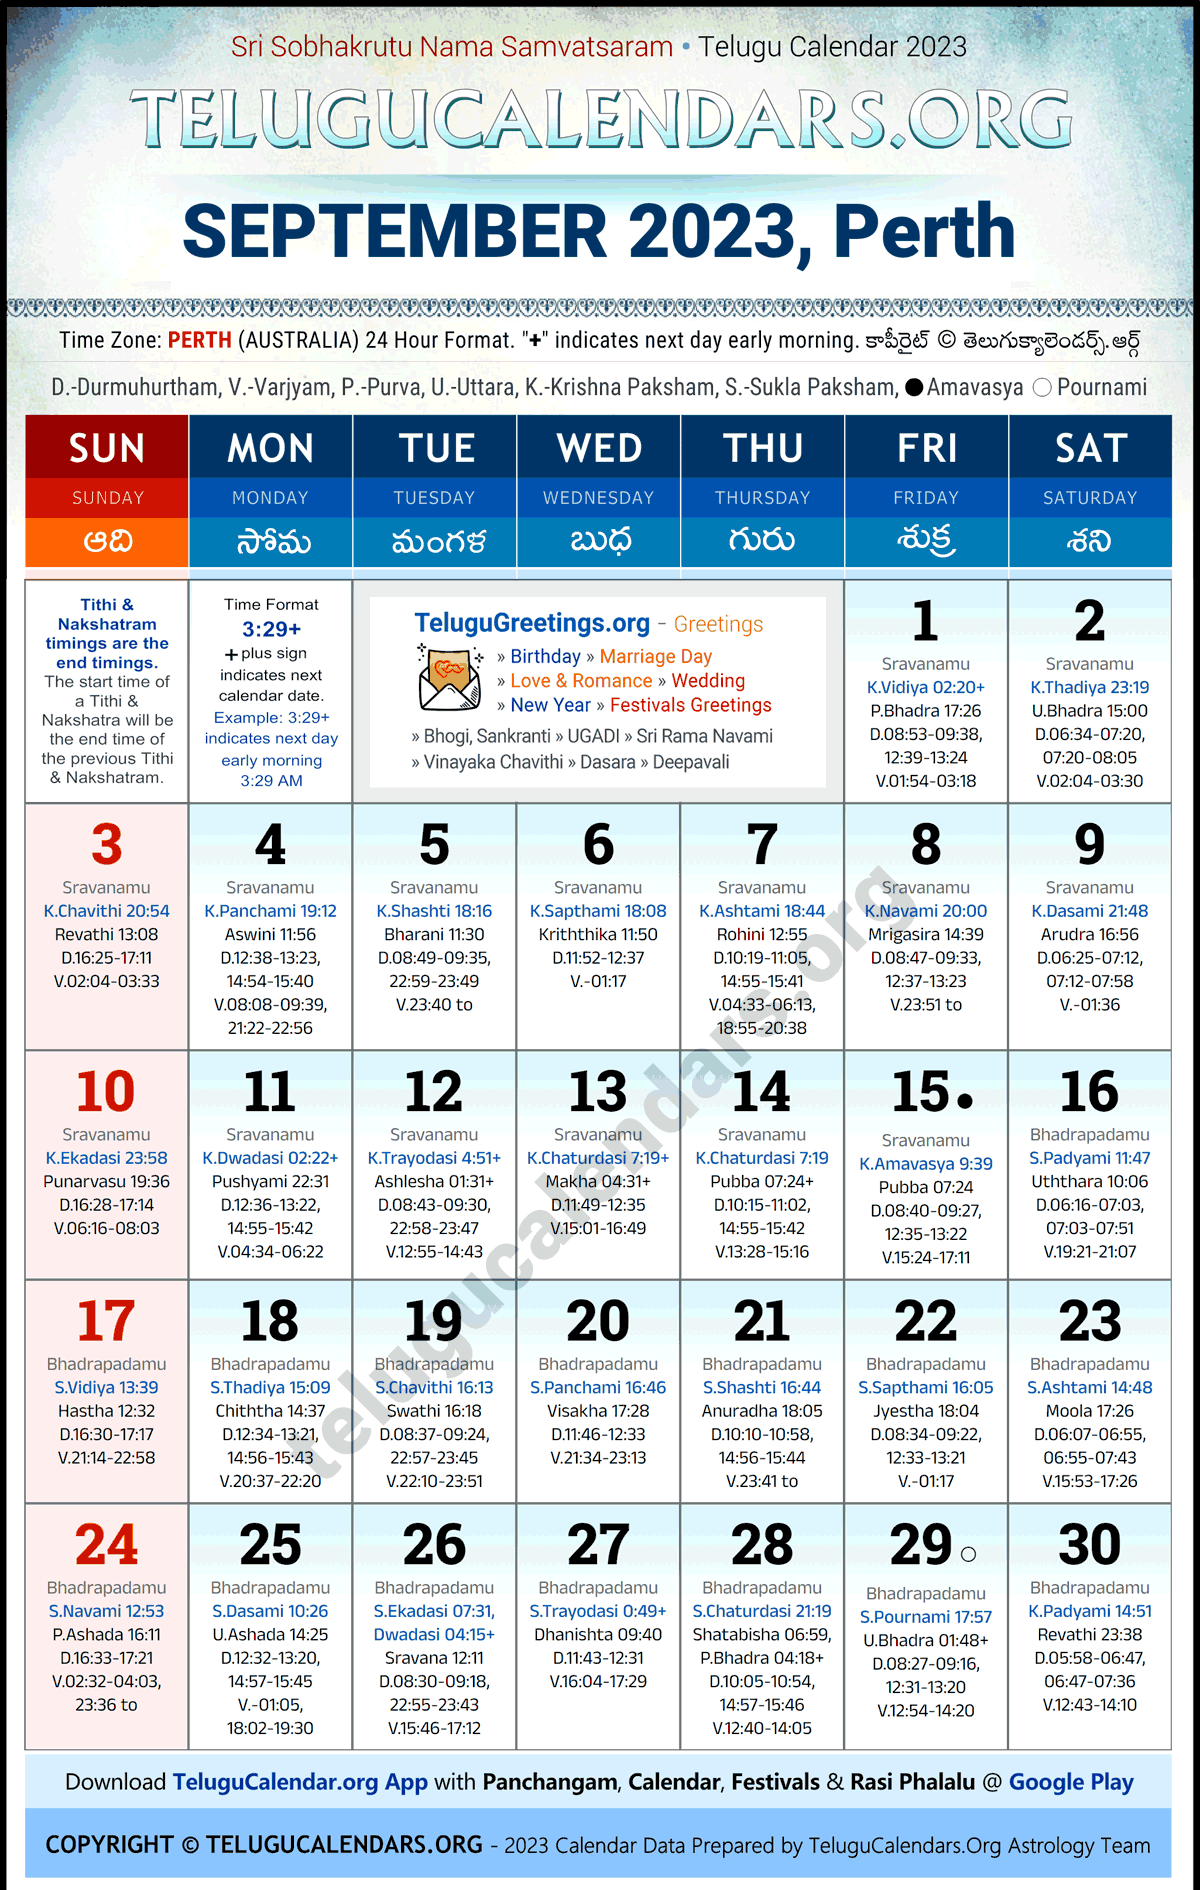 Telugu Calendar 2023 September Festivals for Perth